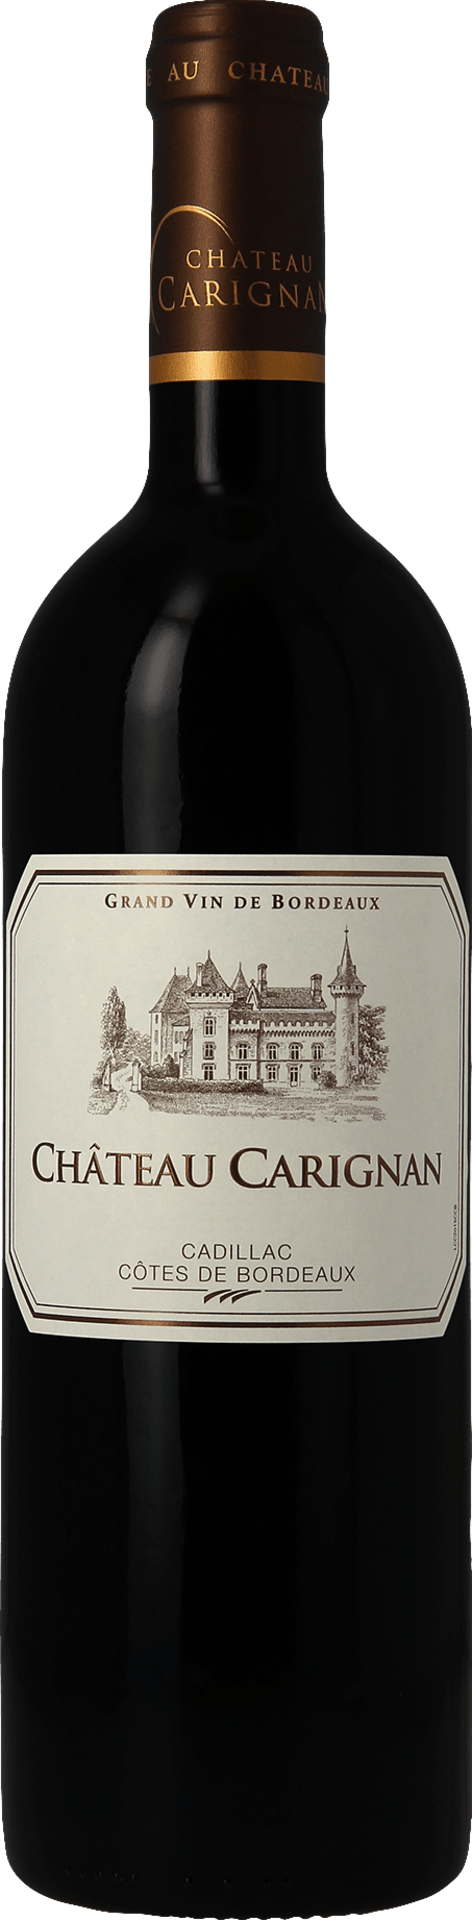 Château Carignan